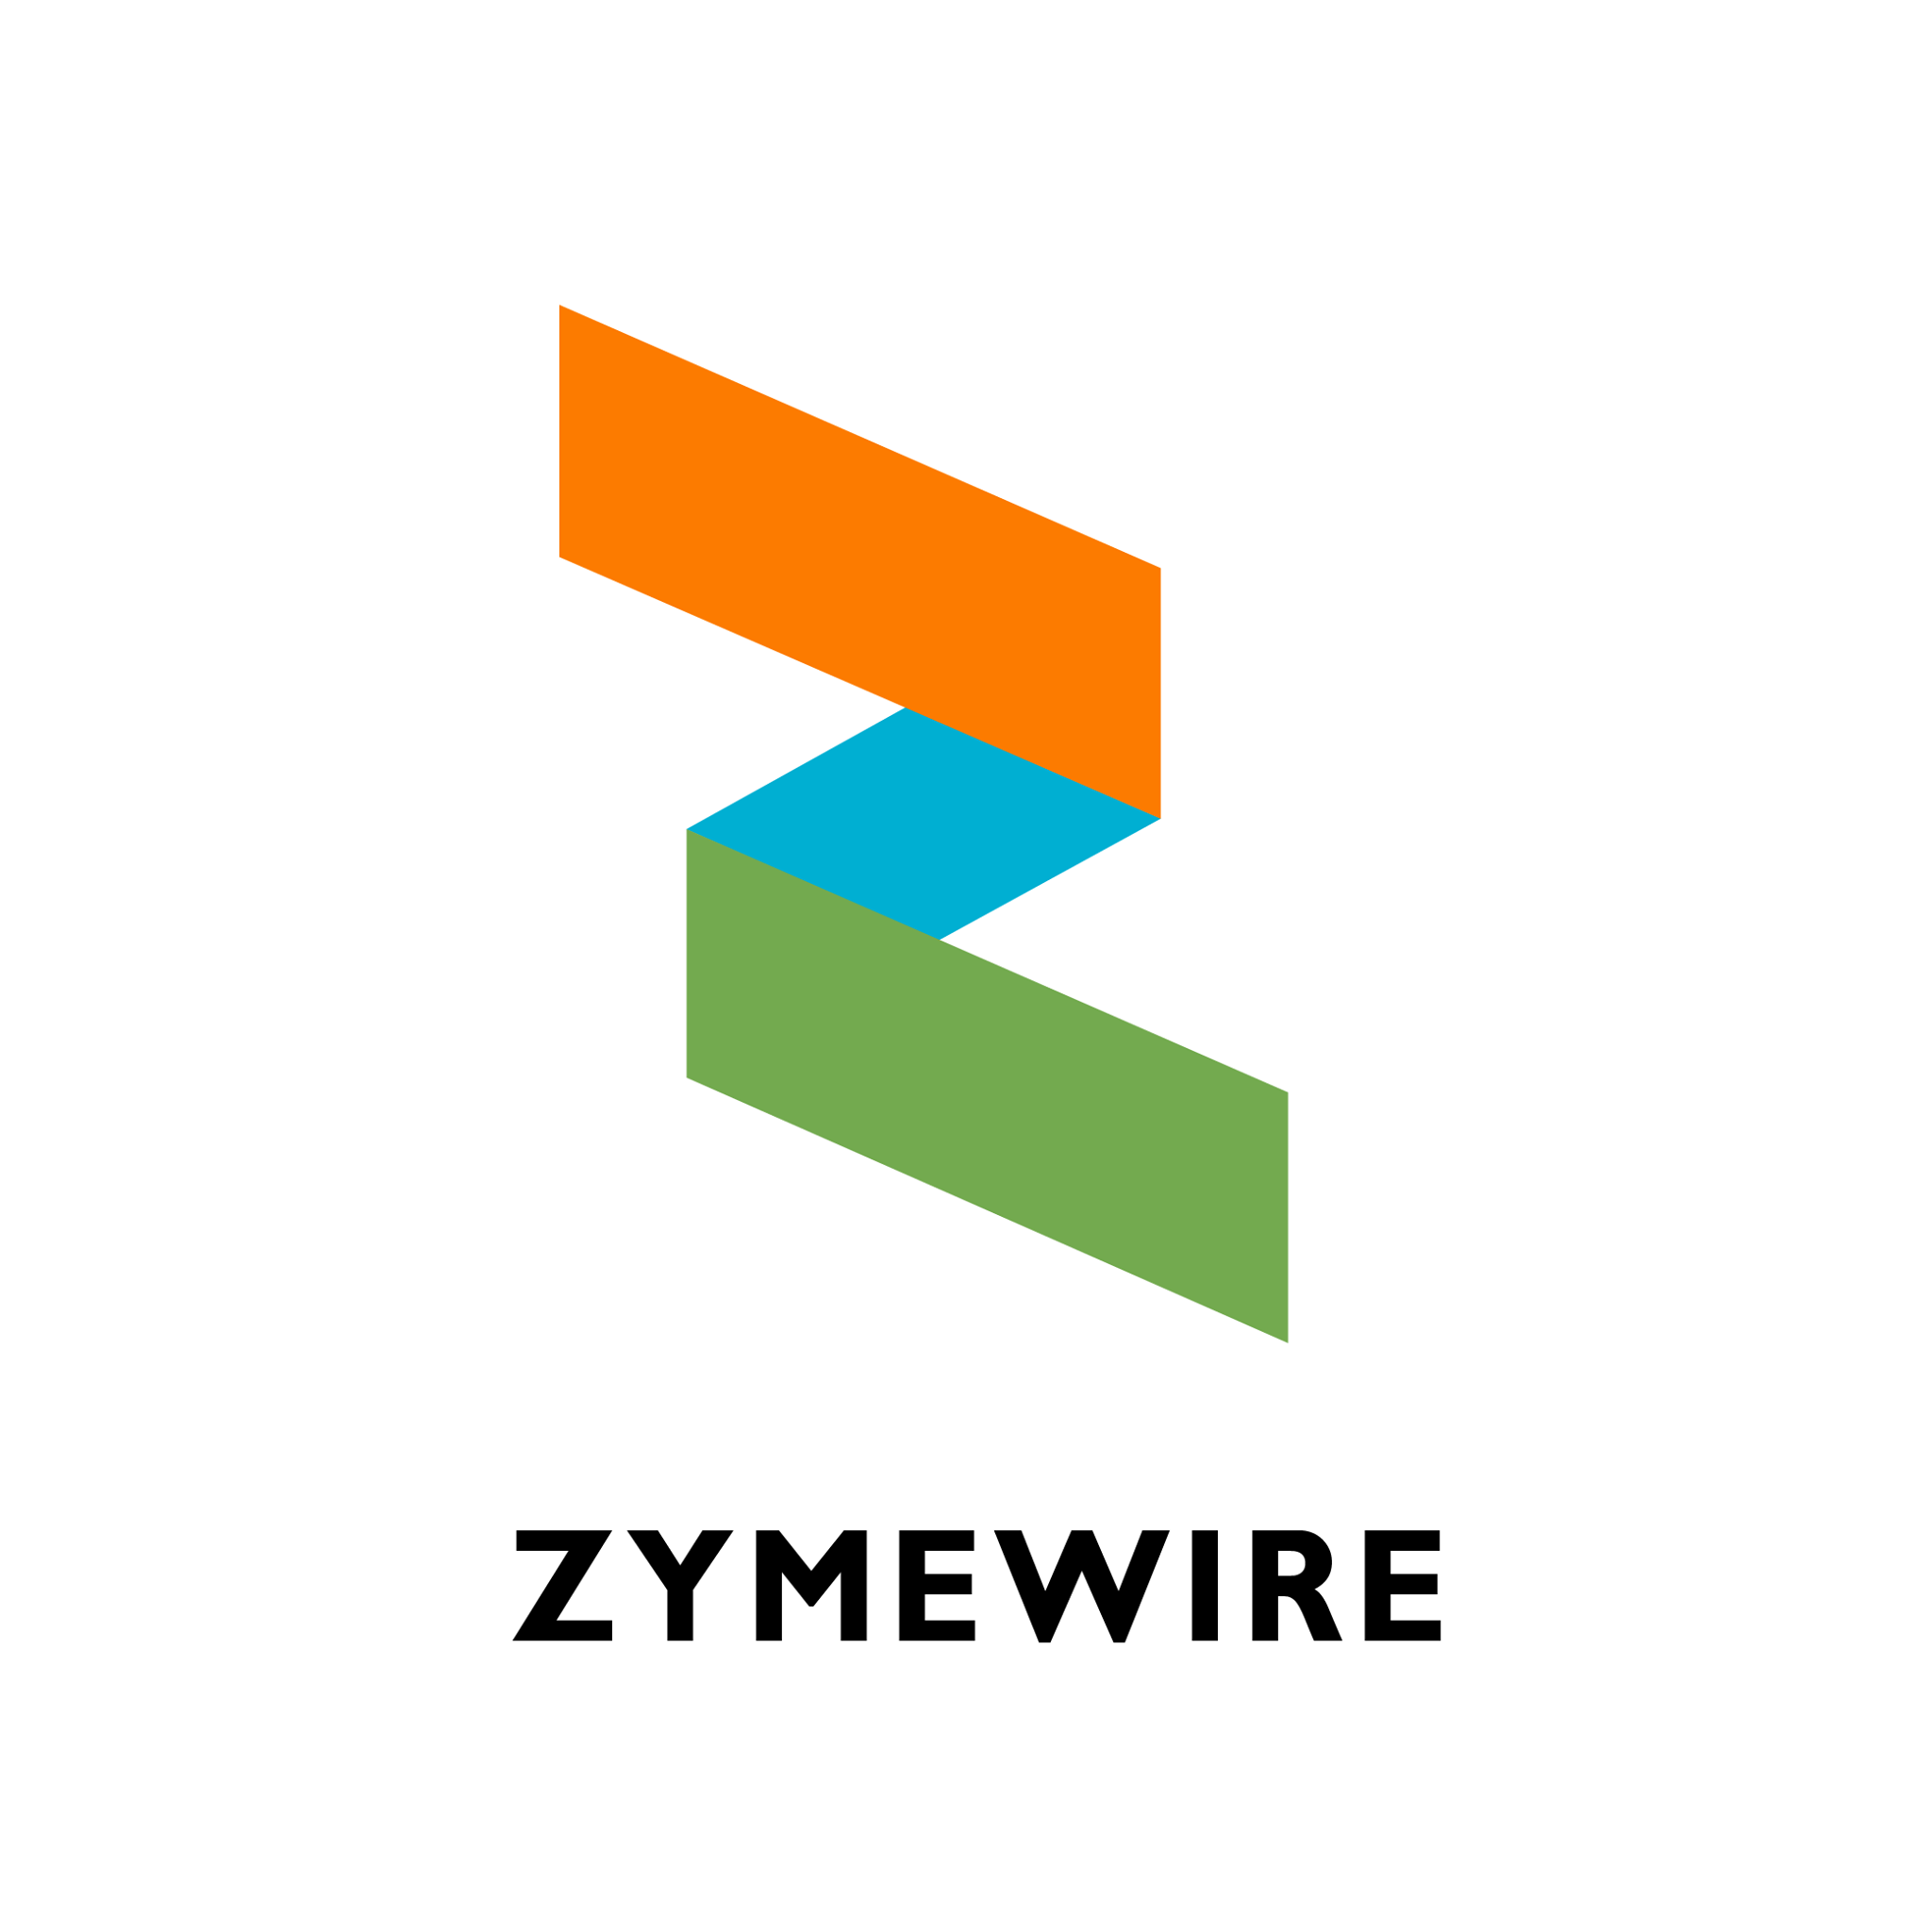 Zymewire - Sales Intelligence Software